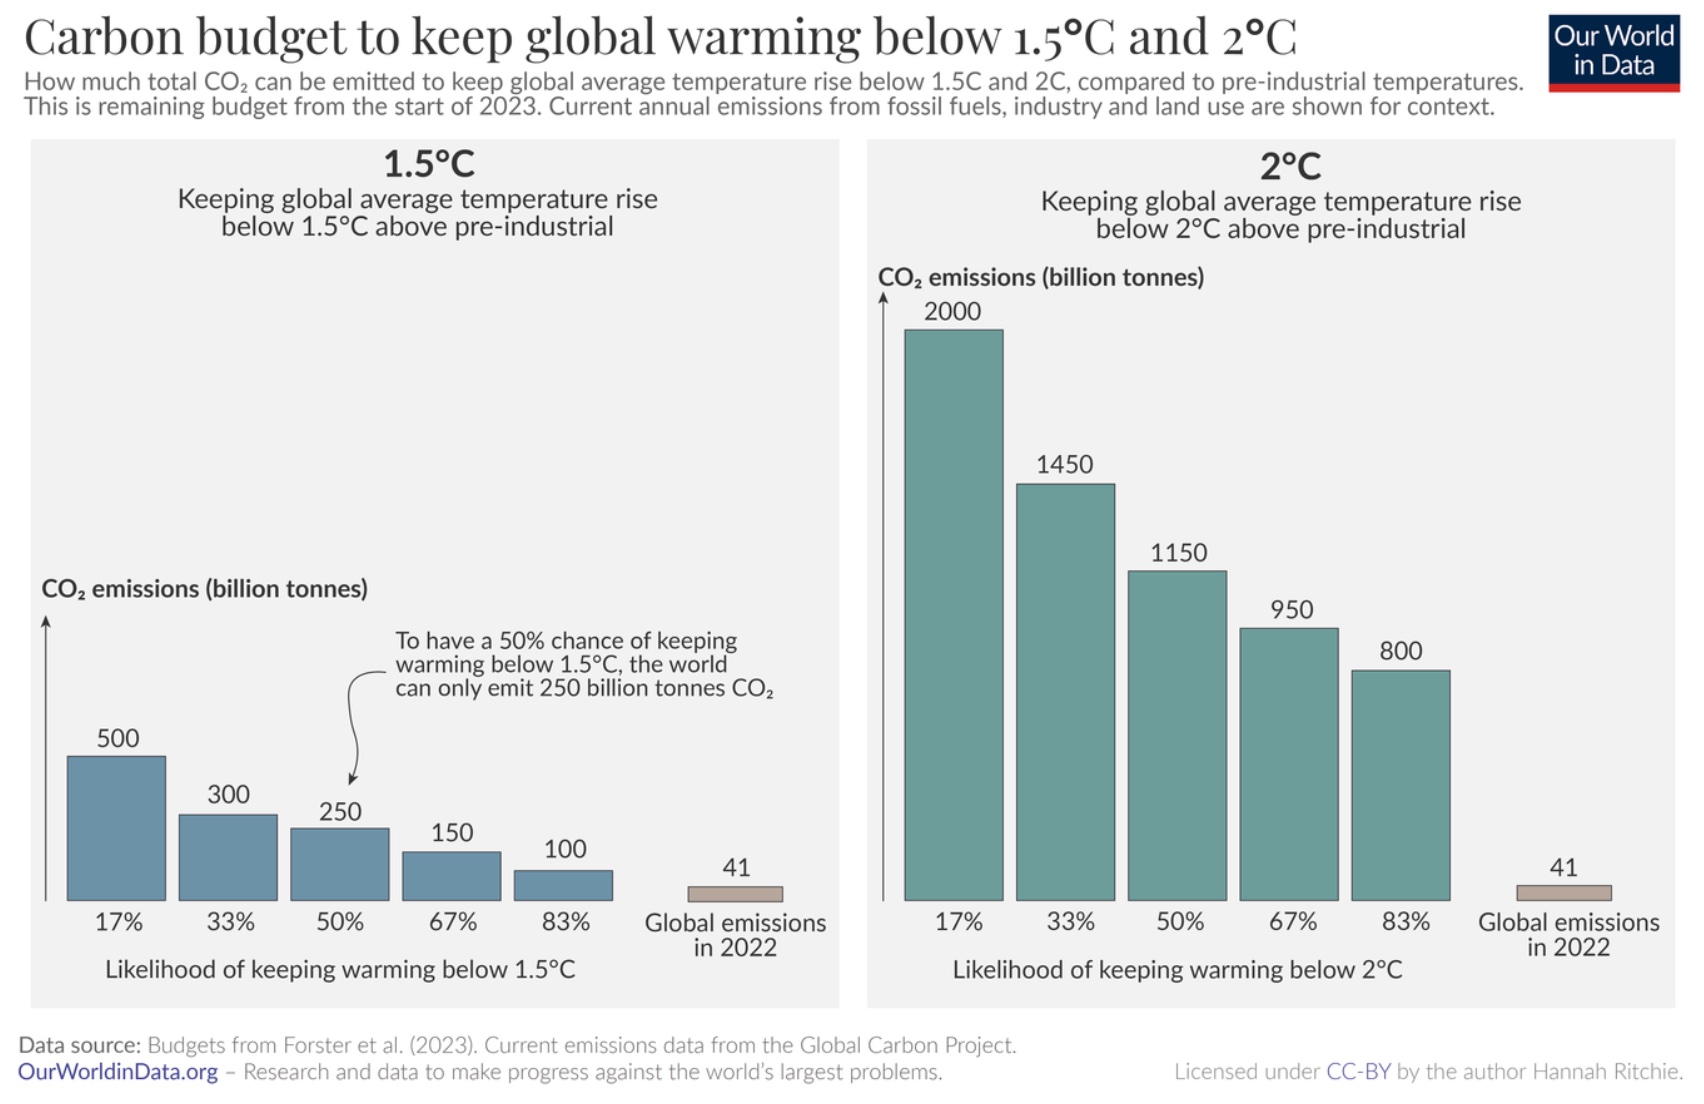 Carbon budget to keep global warming below 2 degrees c.